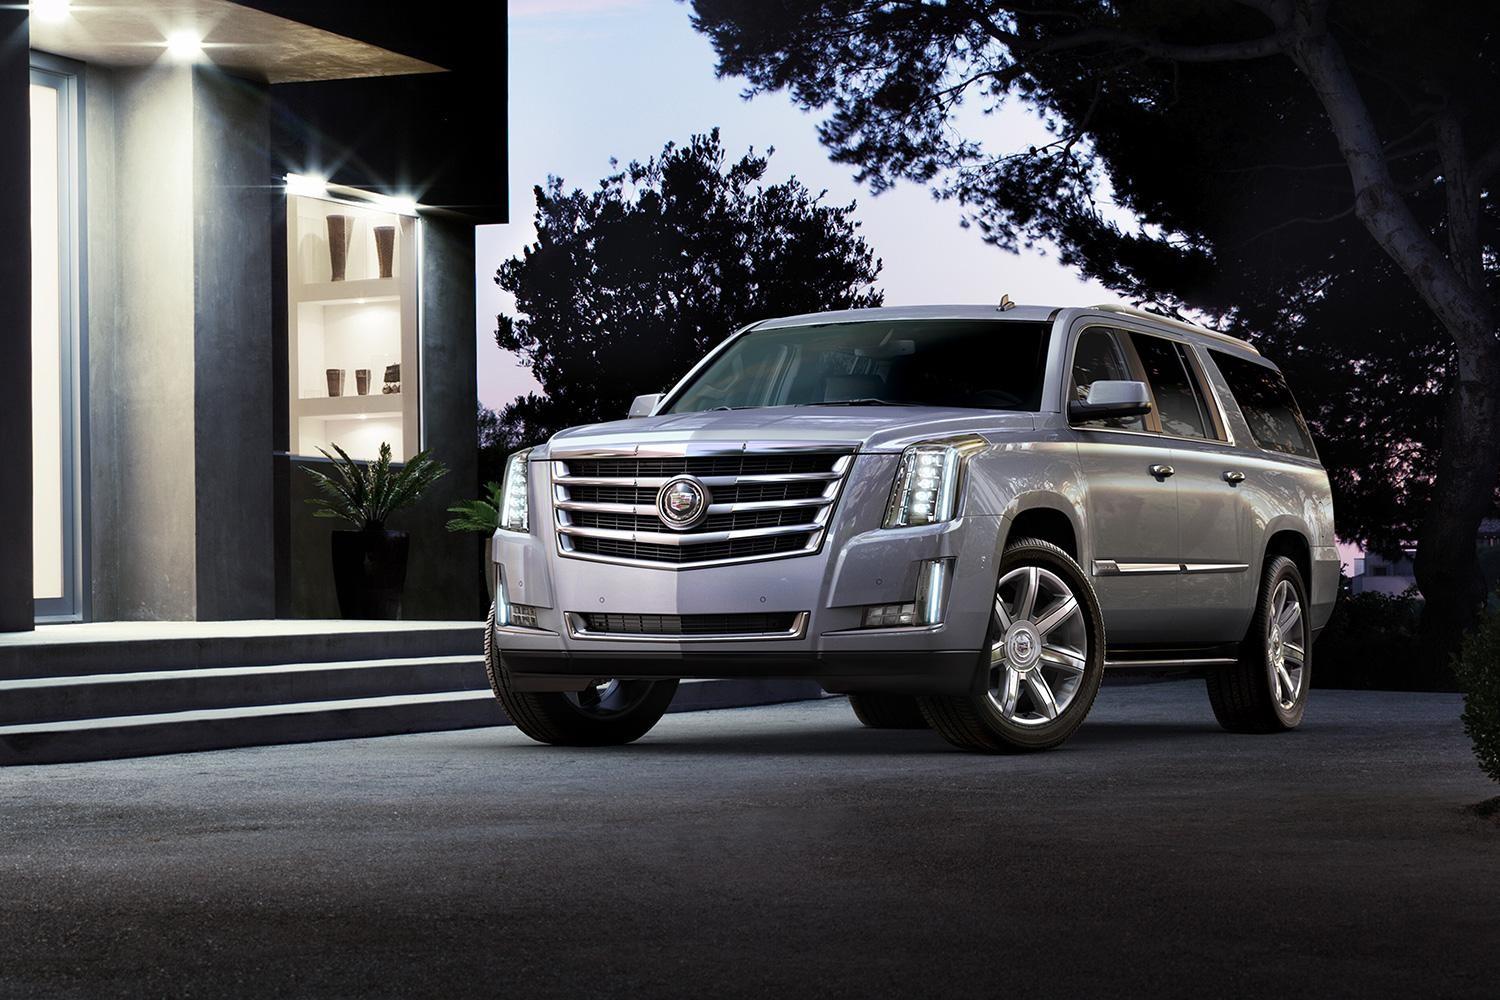 Cadillac 2015 escalade opening a new generation of luxury SUVs #6